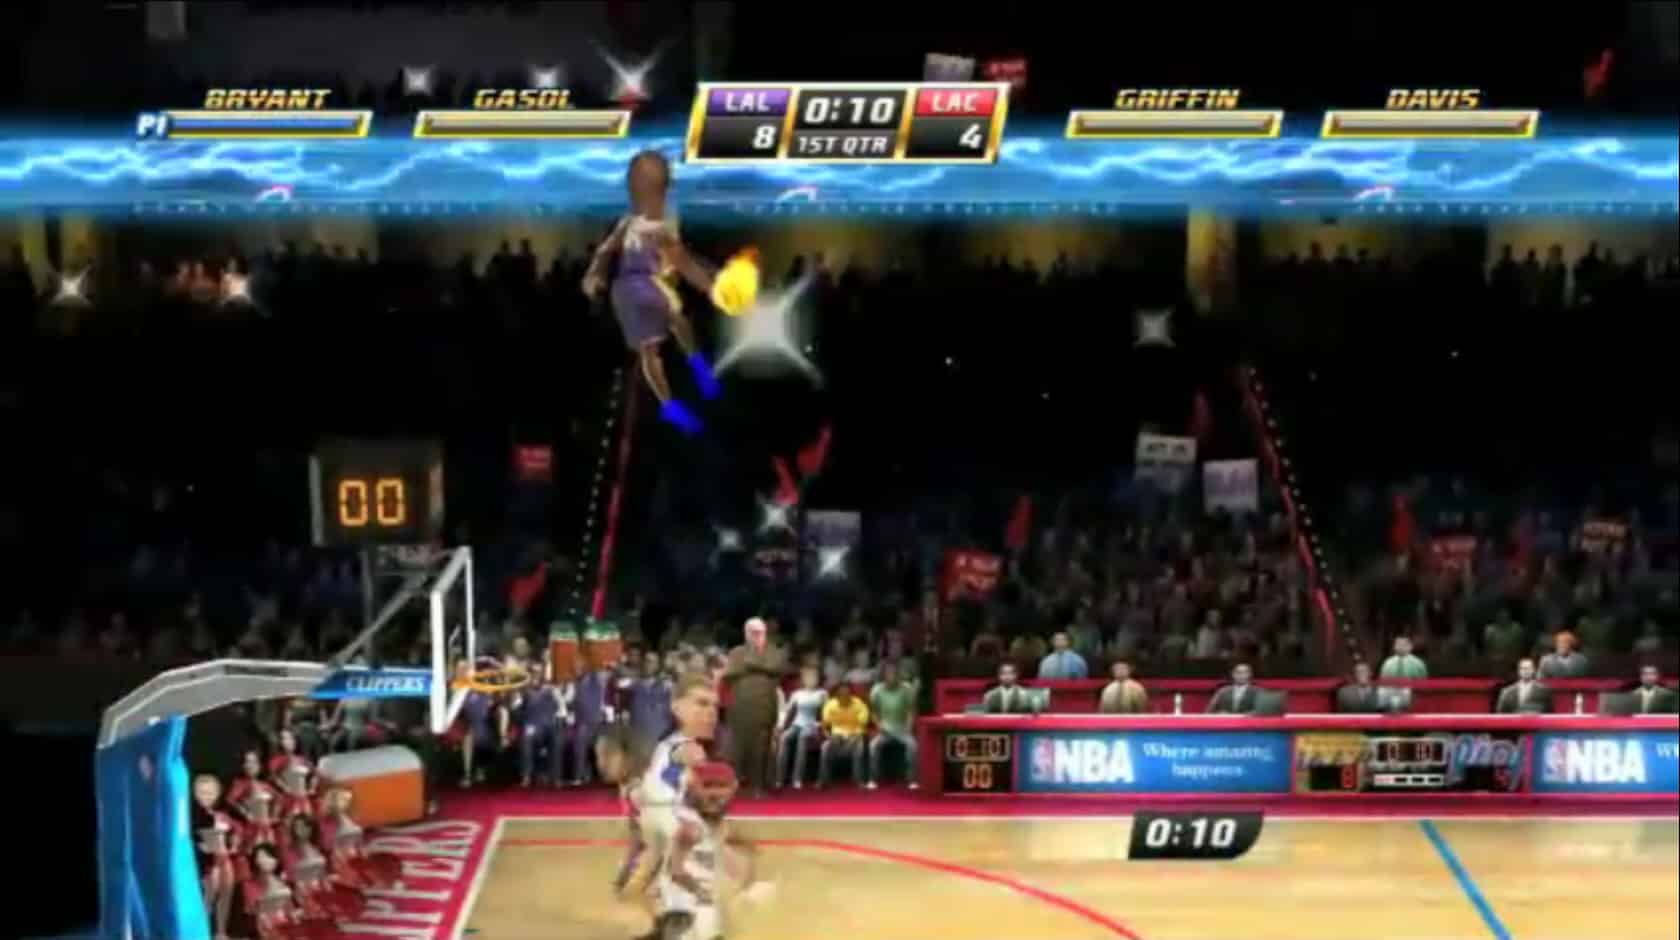 NBA JAM: On Fire Edition – Now Available on XBLA/PSN